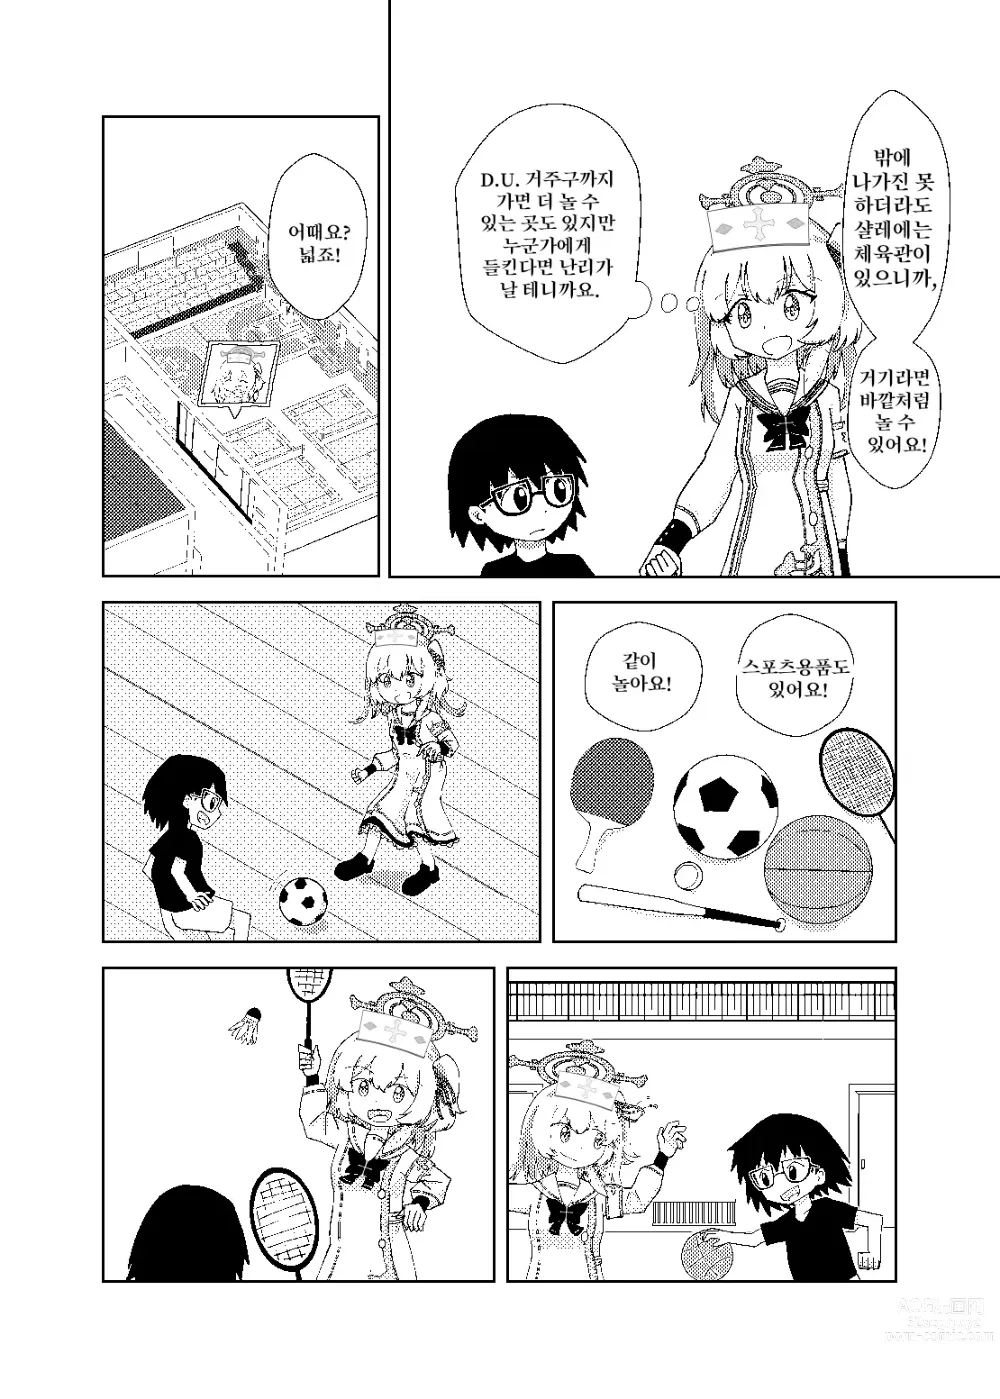 Page 6 of doujinshi 세리나가 유아화 선생님을 간호하는 이야기